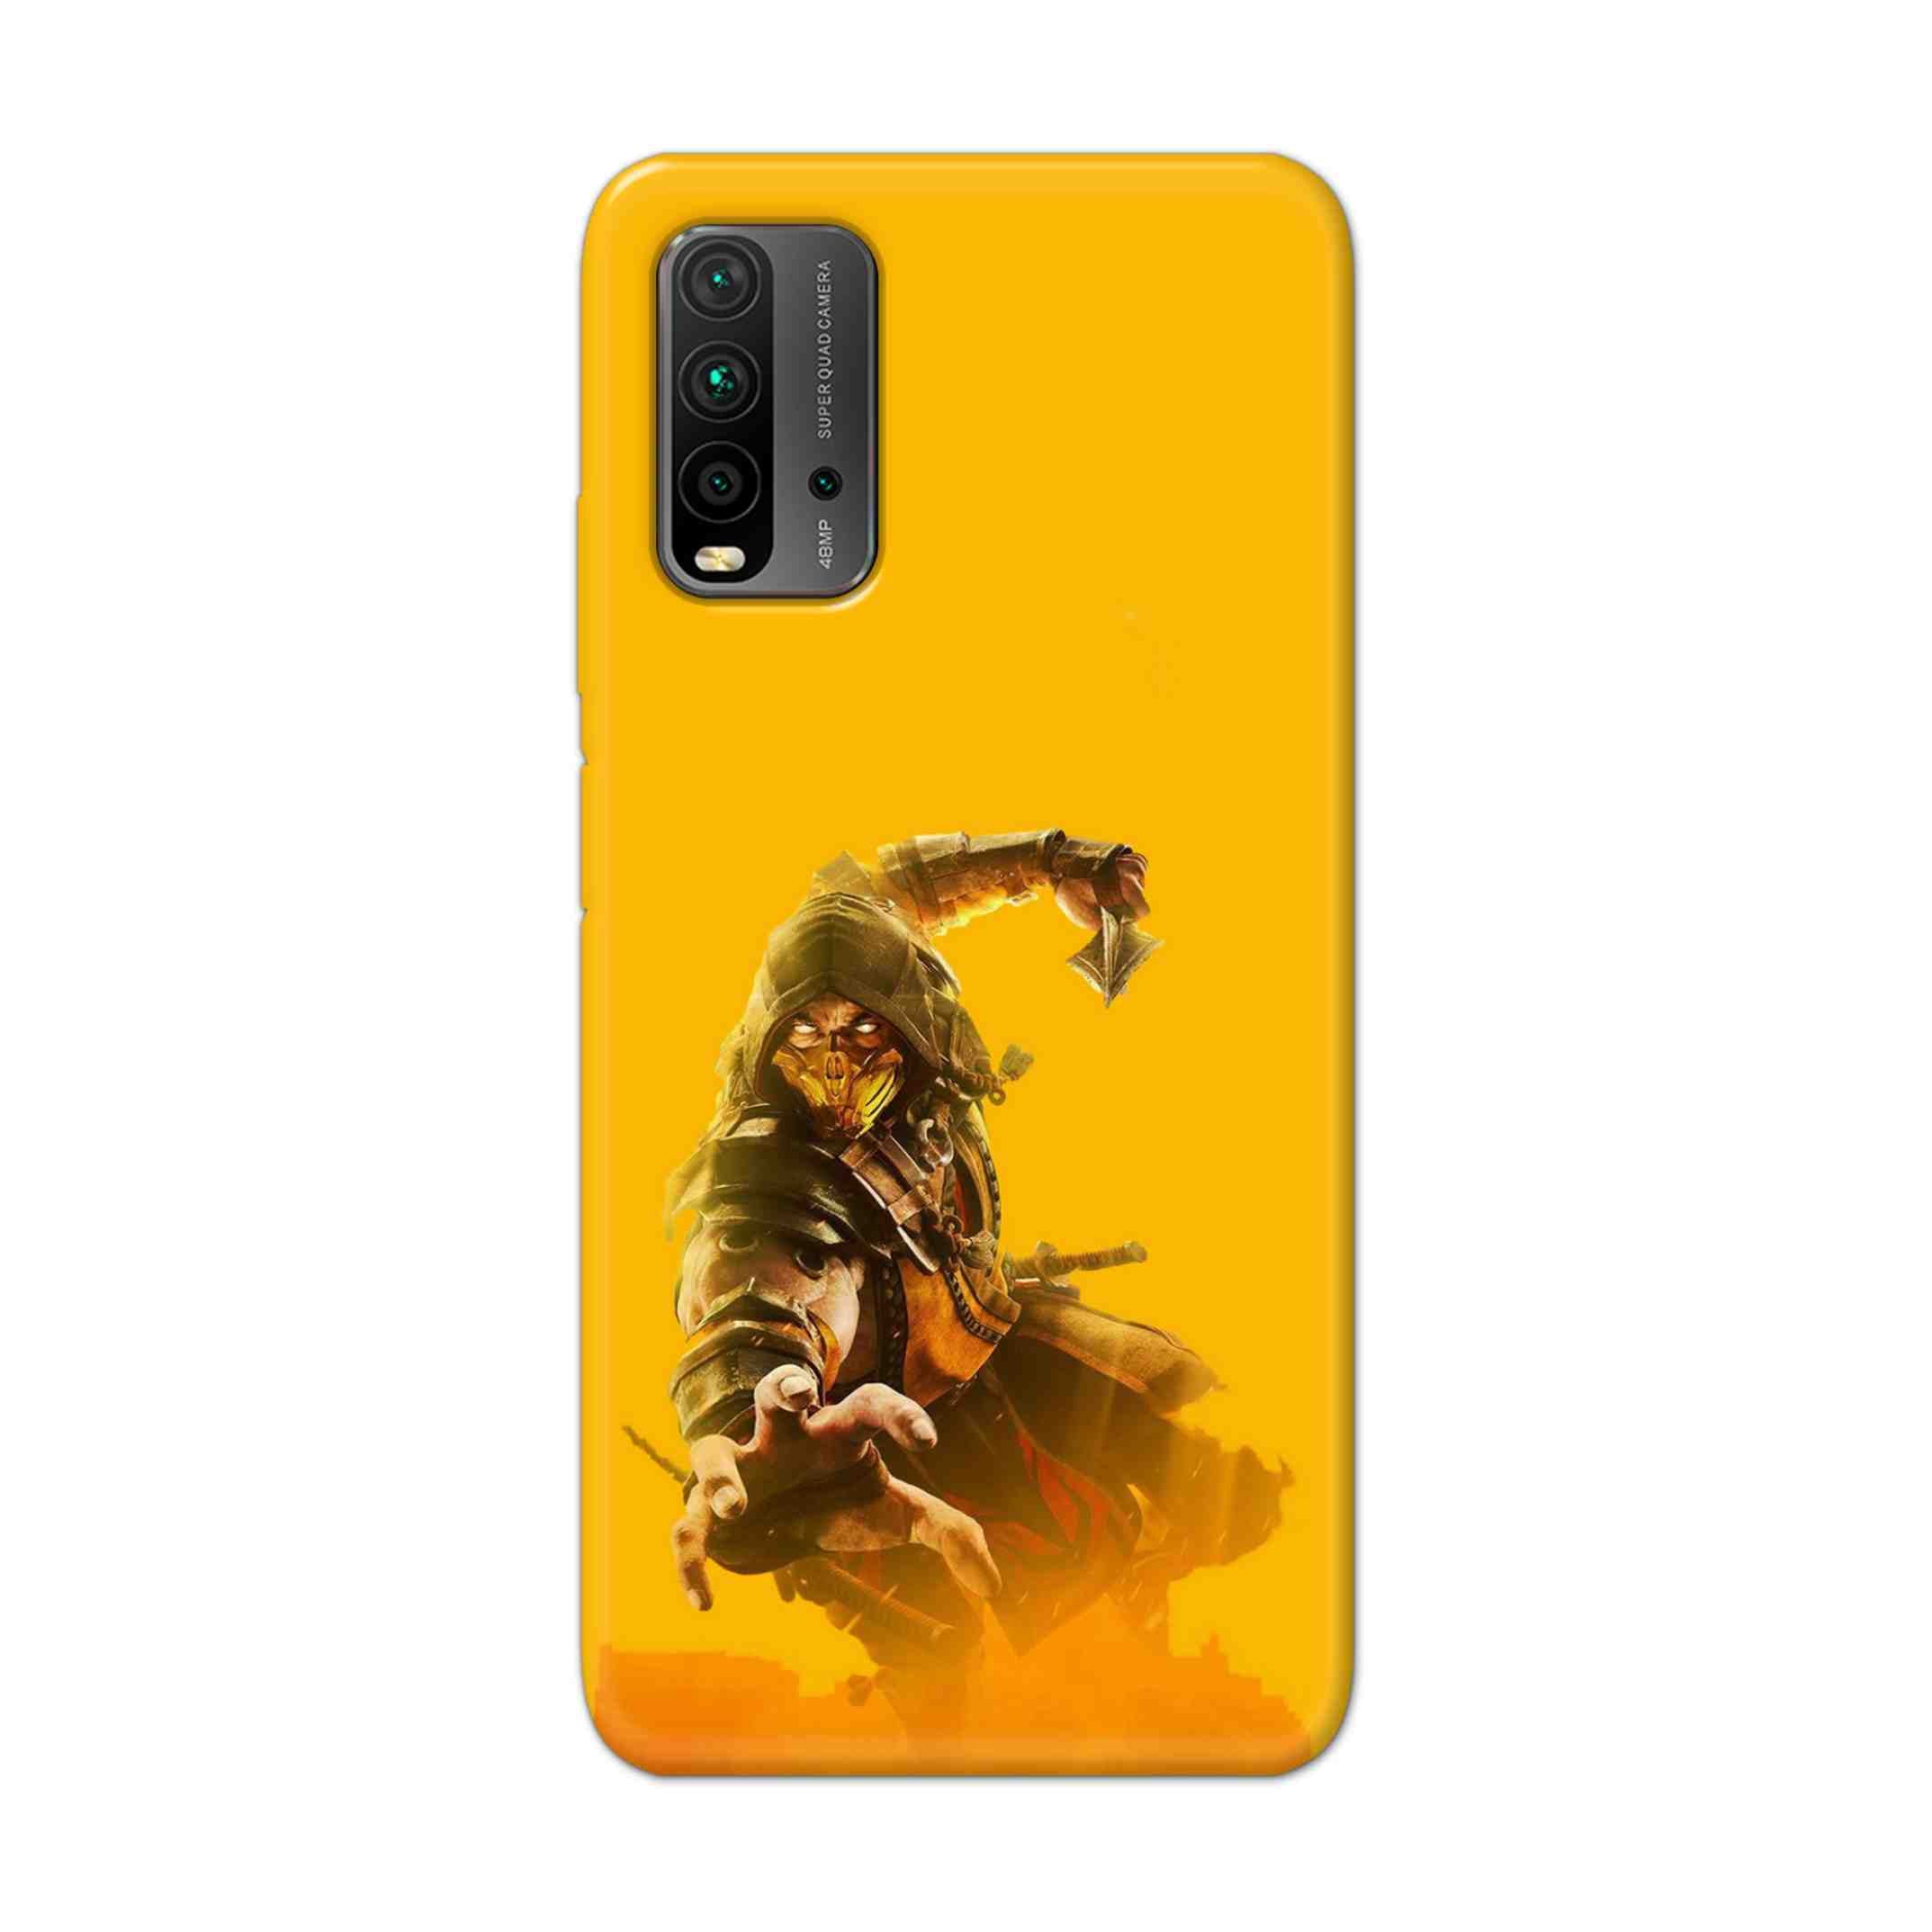 Buy Mortal Kombat Hard Back Mobile Phone Case Cover For Redmi 9 Power Online